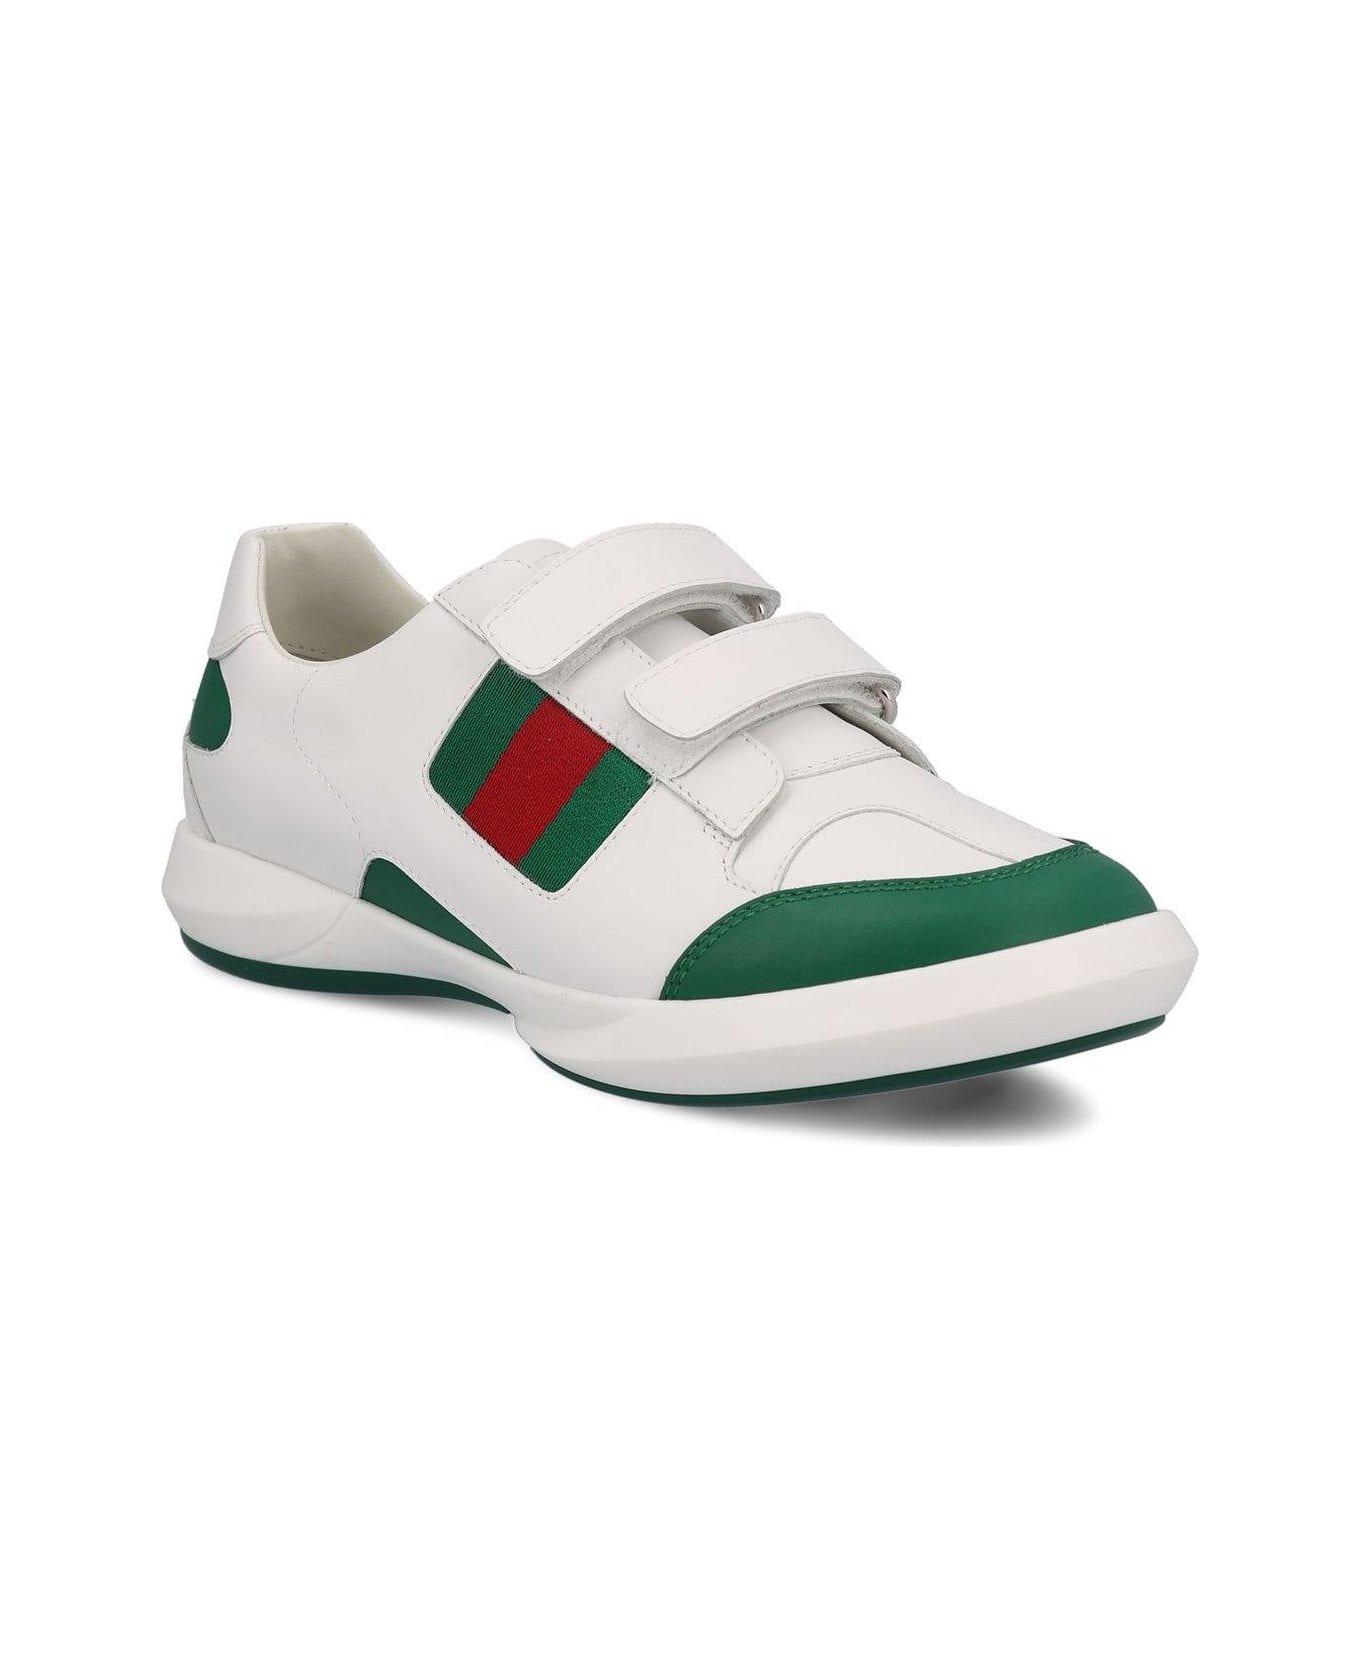 Gucci Logo Printed Round Toe Sneakers - Bianco